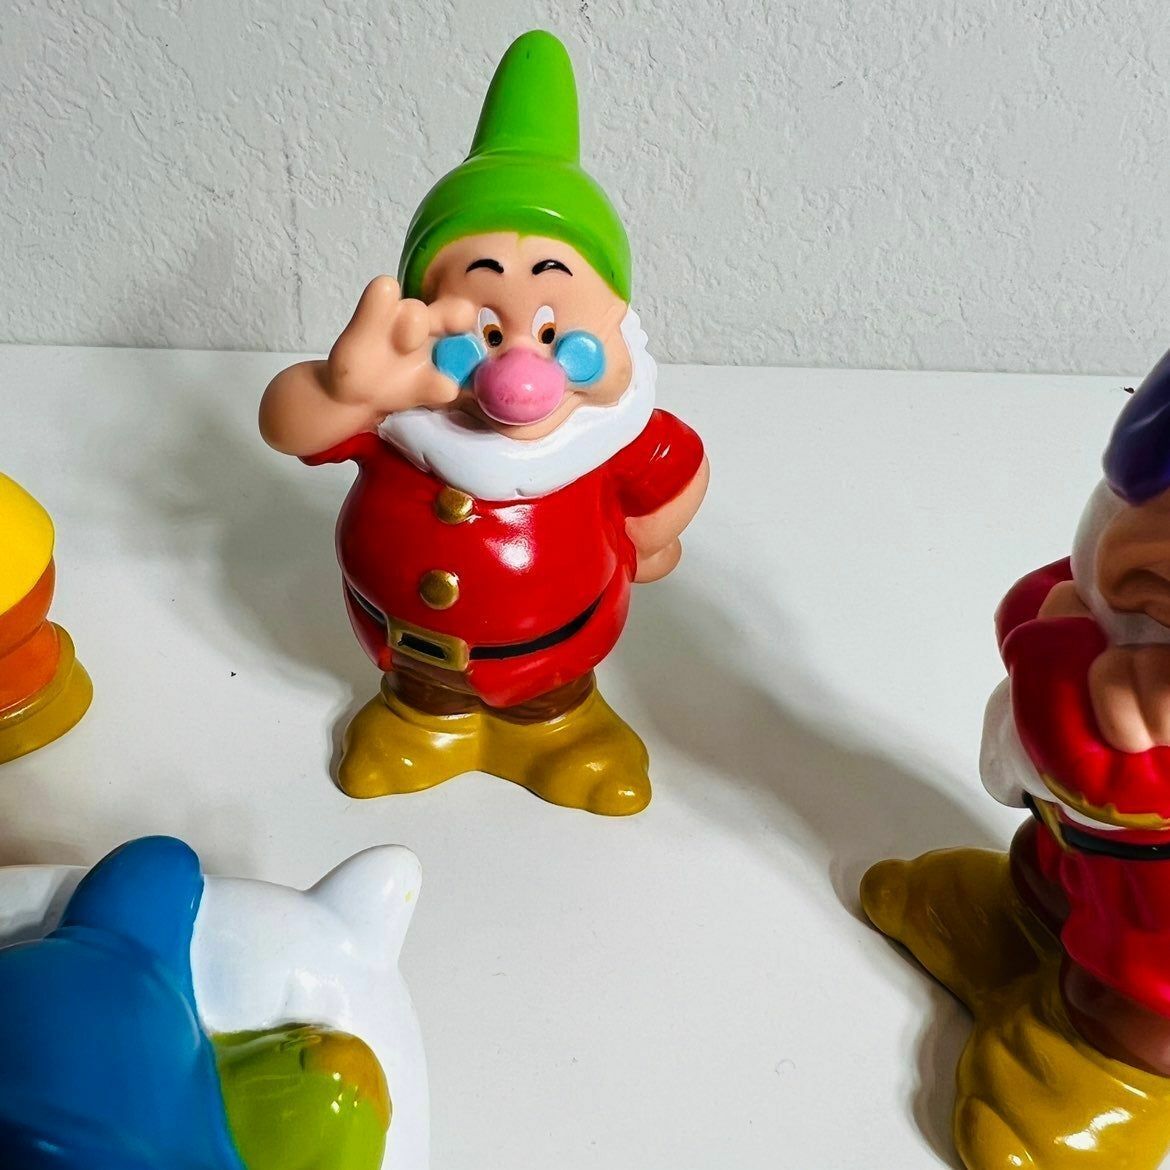 Snow White Dwarfs toy figures set of 5 toys Disney Sleepy, Bashful, Doc, Grumpy